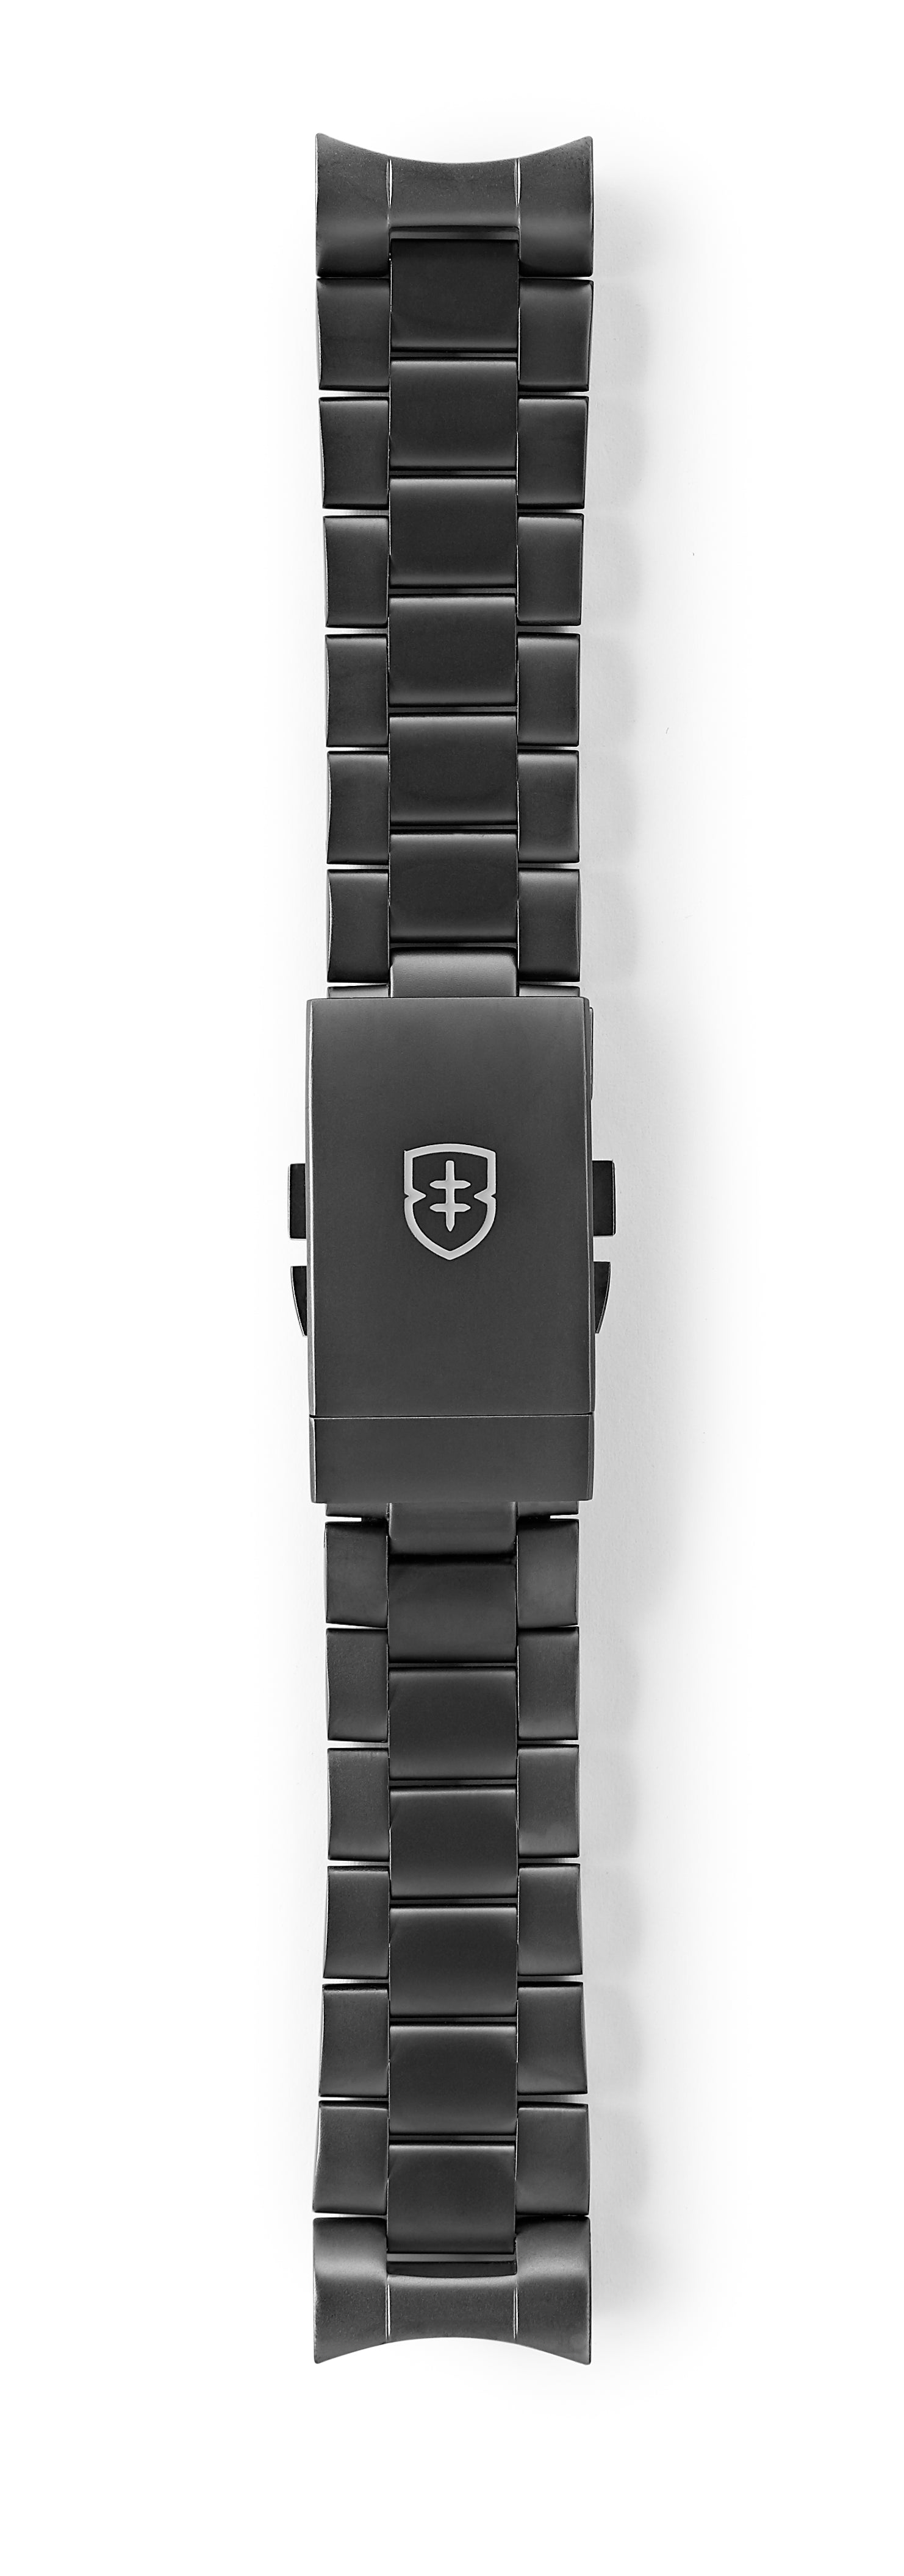 STR-B09: Matt Gunmetal Grey PVD Bracelet